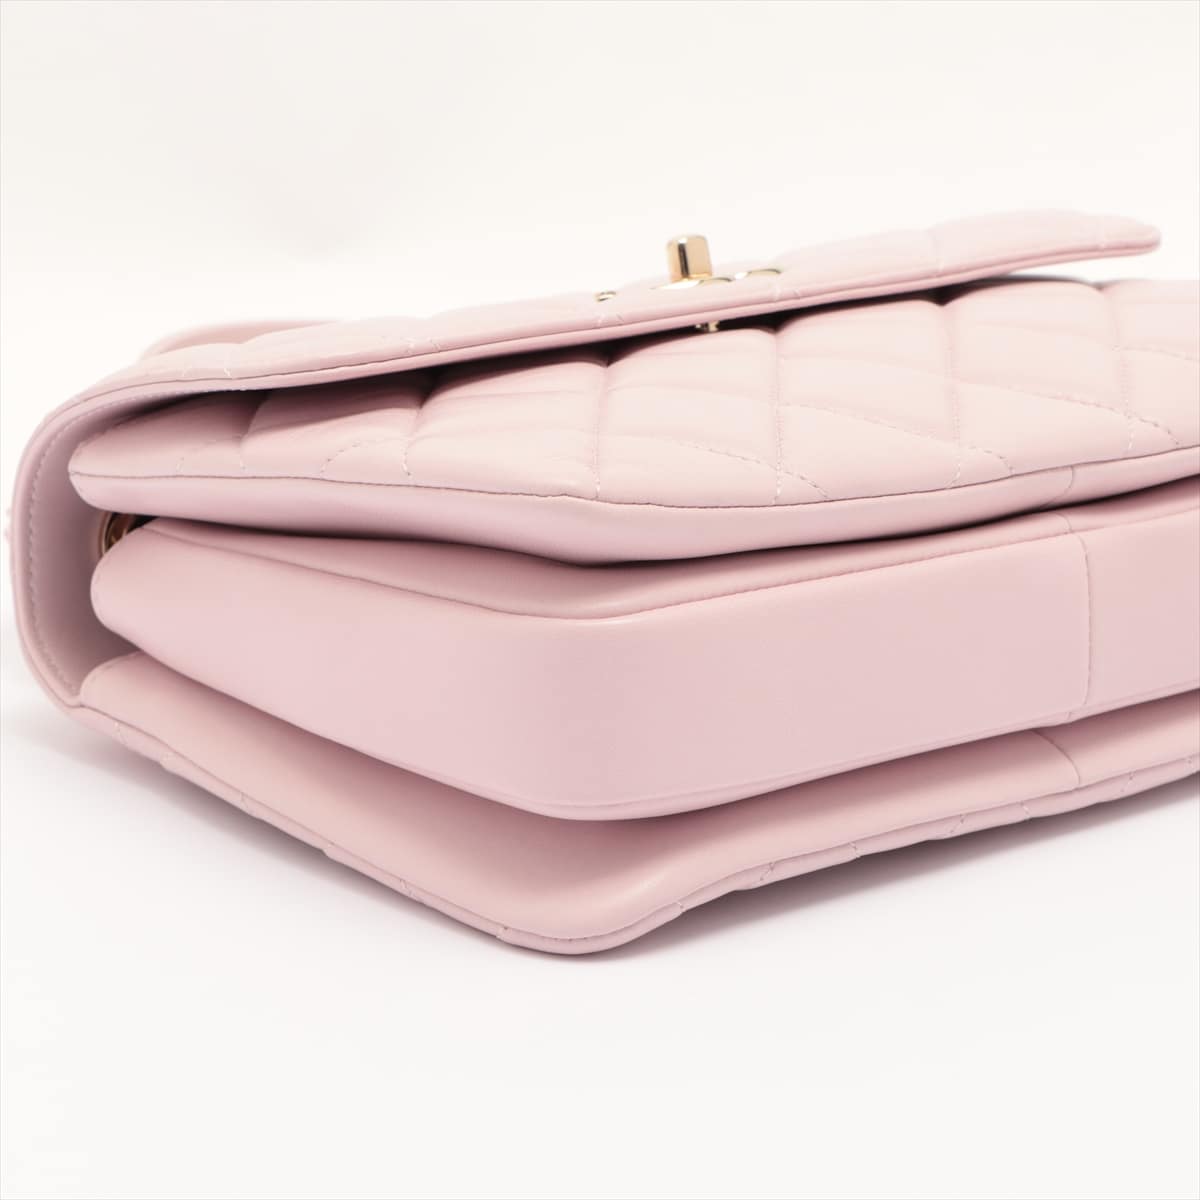 Chanel Trendy CC Lambskin 2way handbag plates Pink Gold Metal fittings 31st A92236